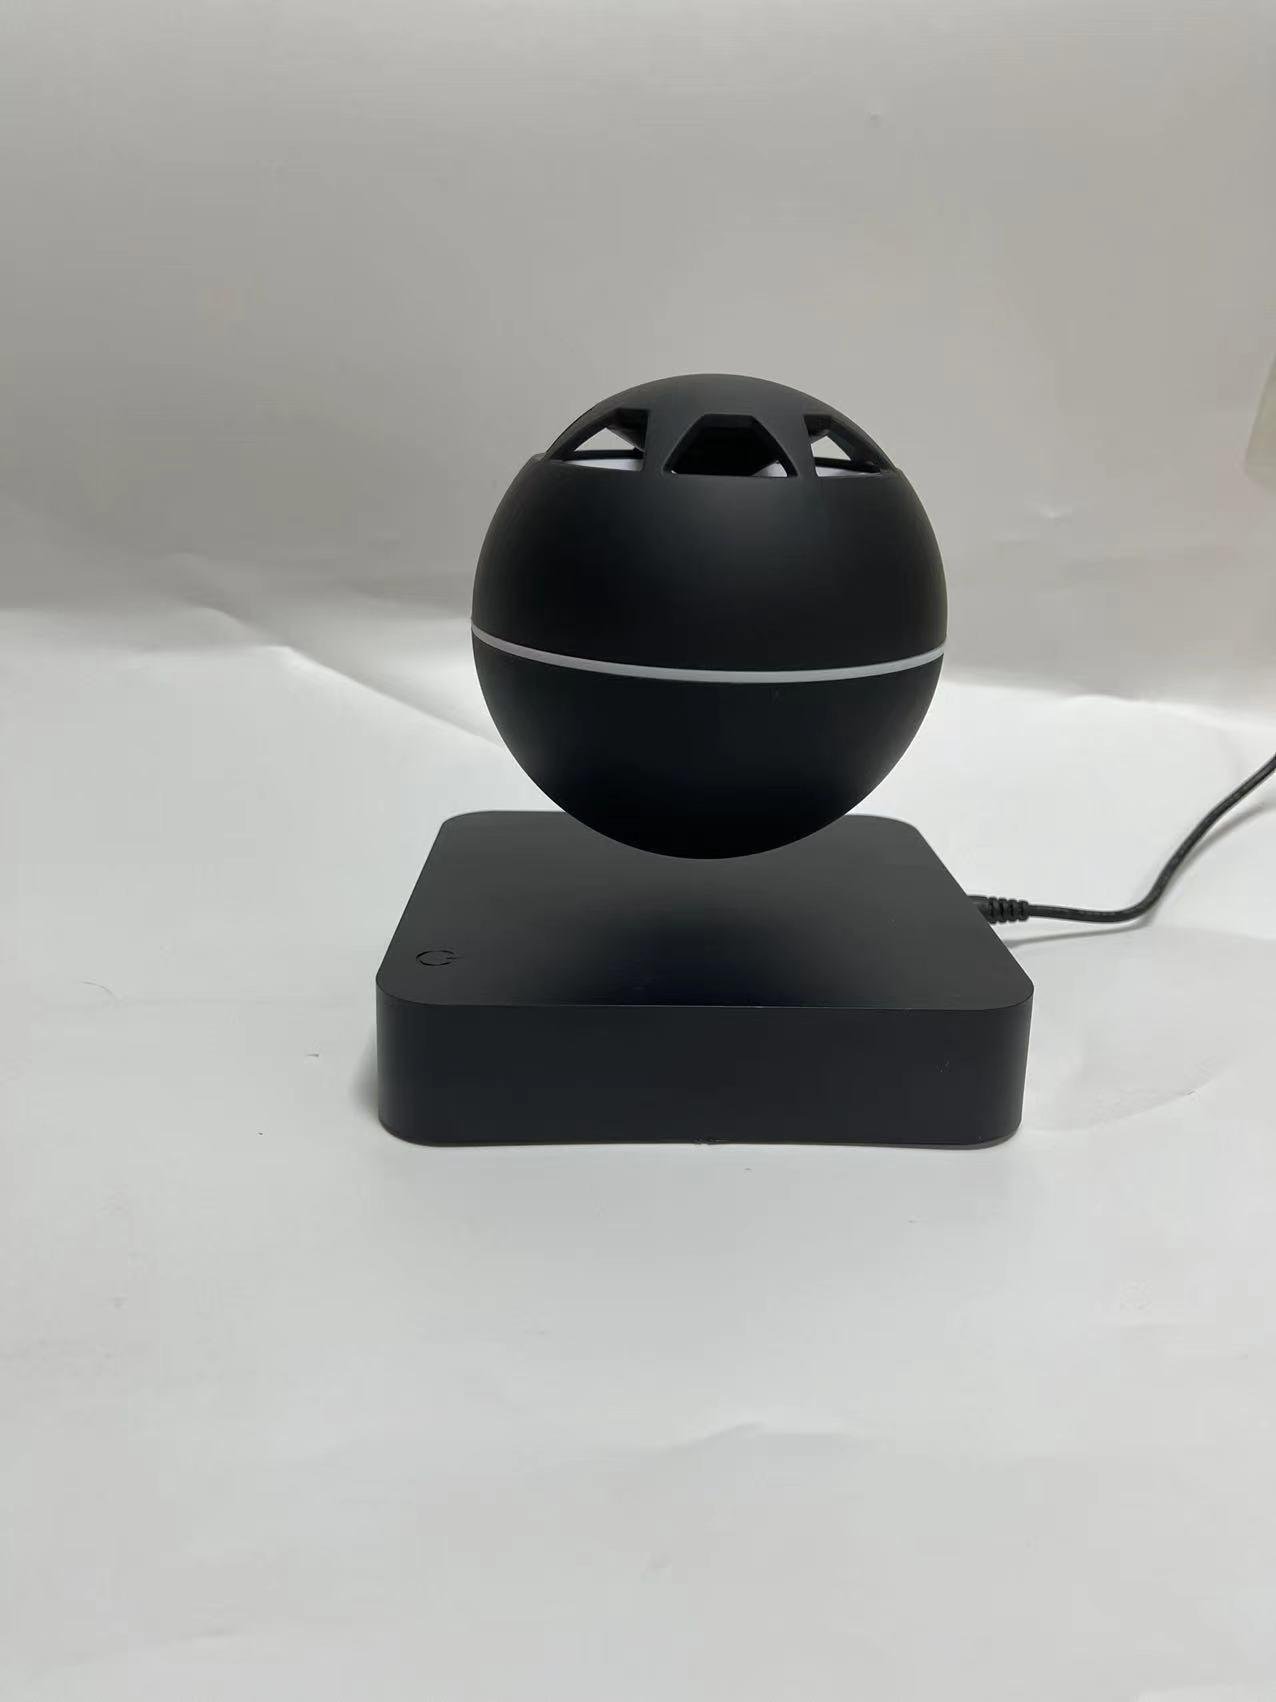 wooden base magnetic levitaiton desk floating bluetooth speaker light for gift  4